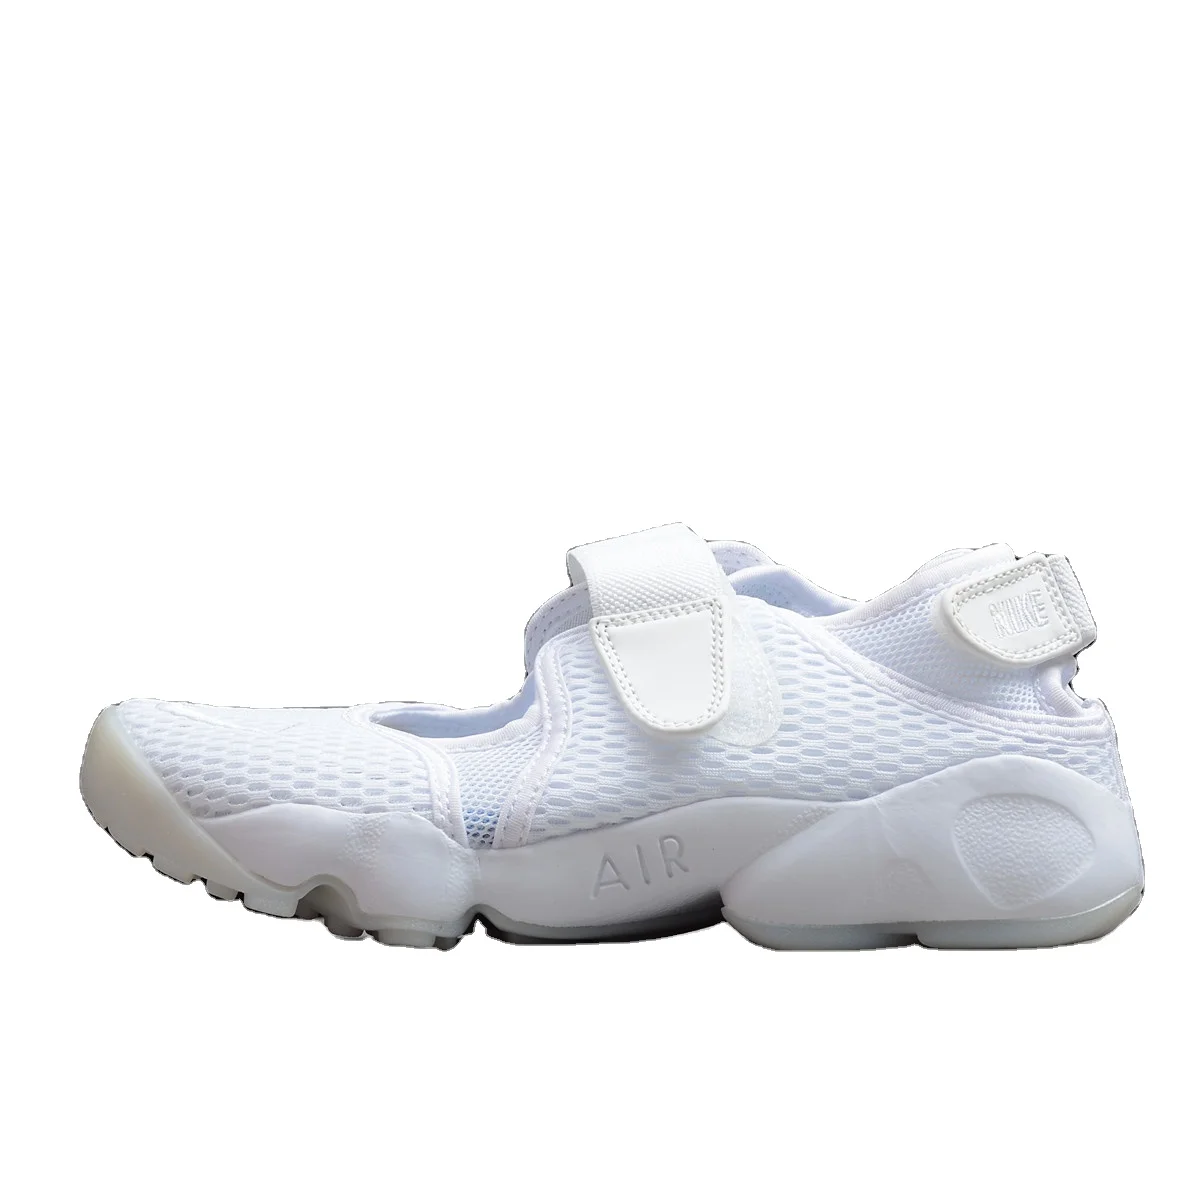 

Nike Air Rift BR top quality Laufschuhe mesh breathable split-toe running shoes for men women unisex sport sneakers, 2 colors